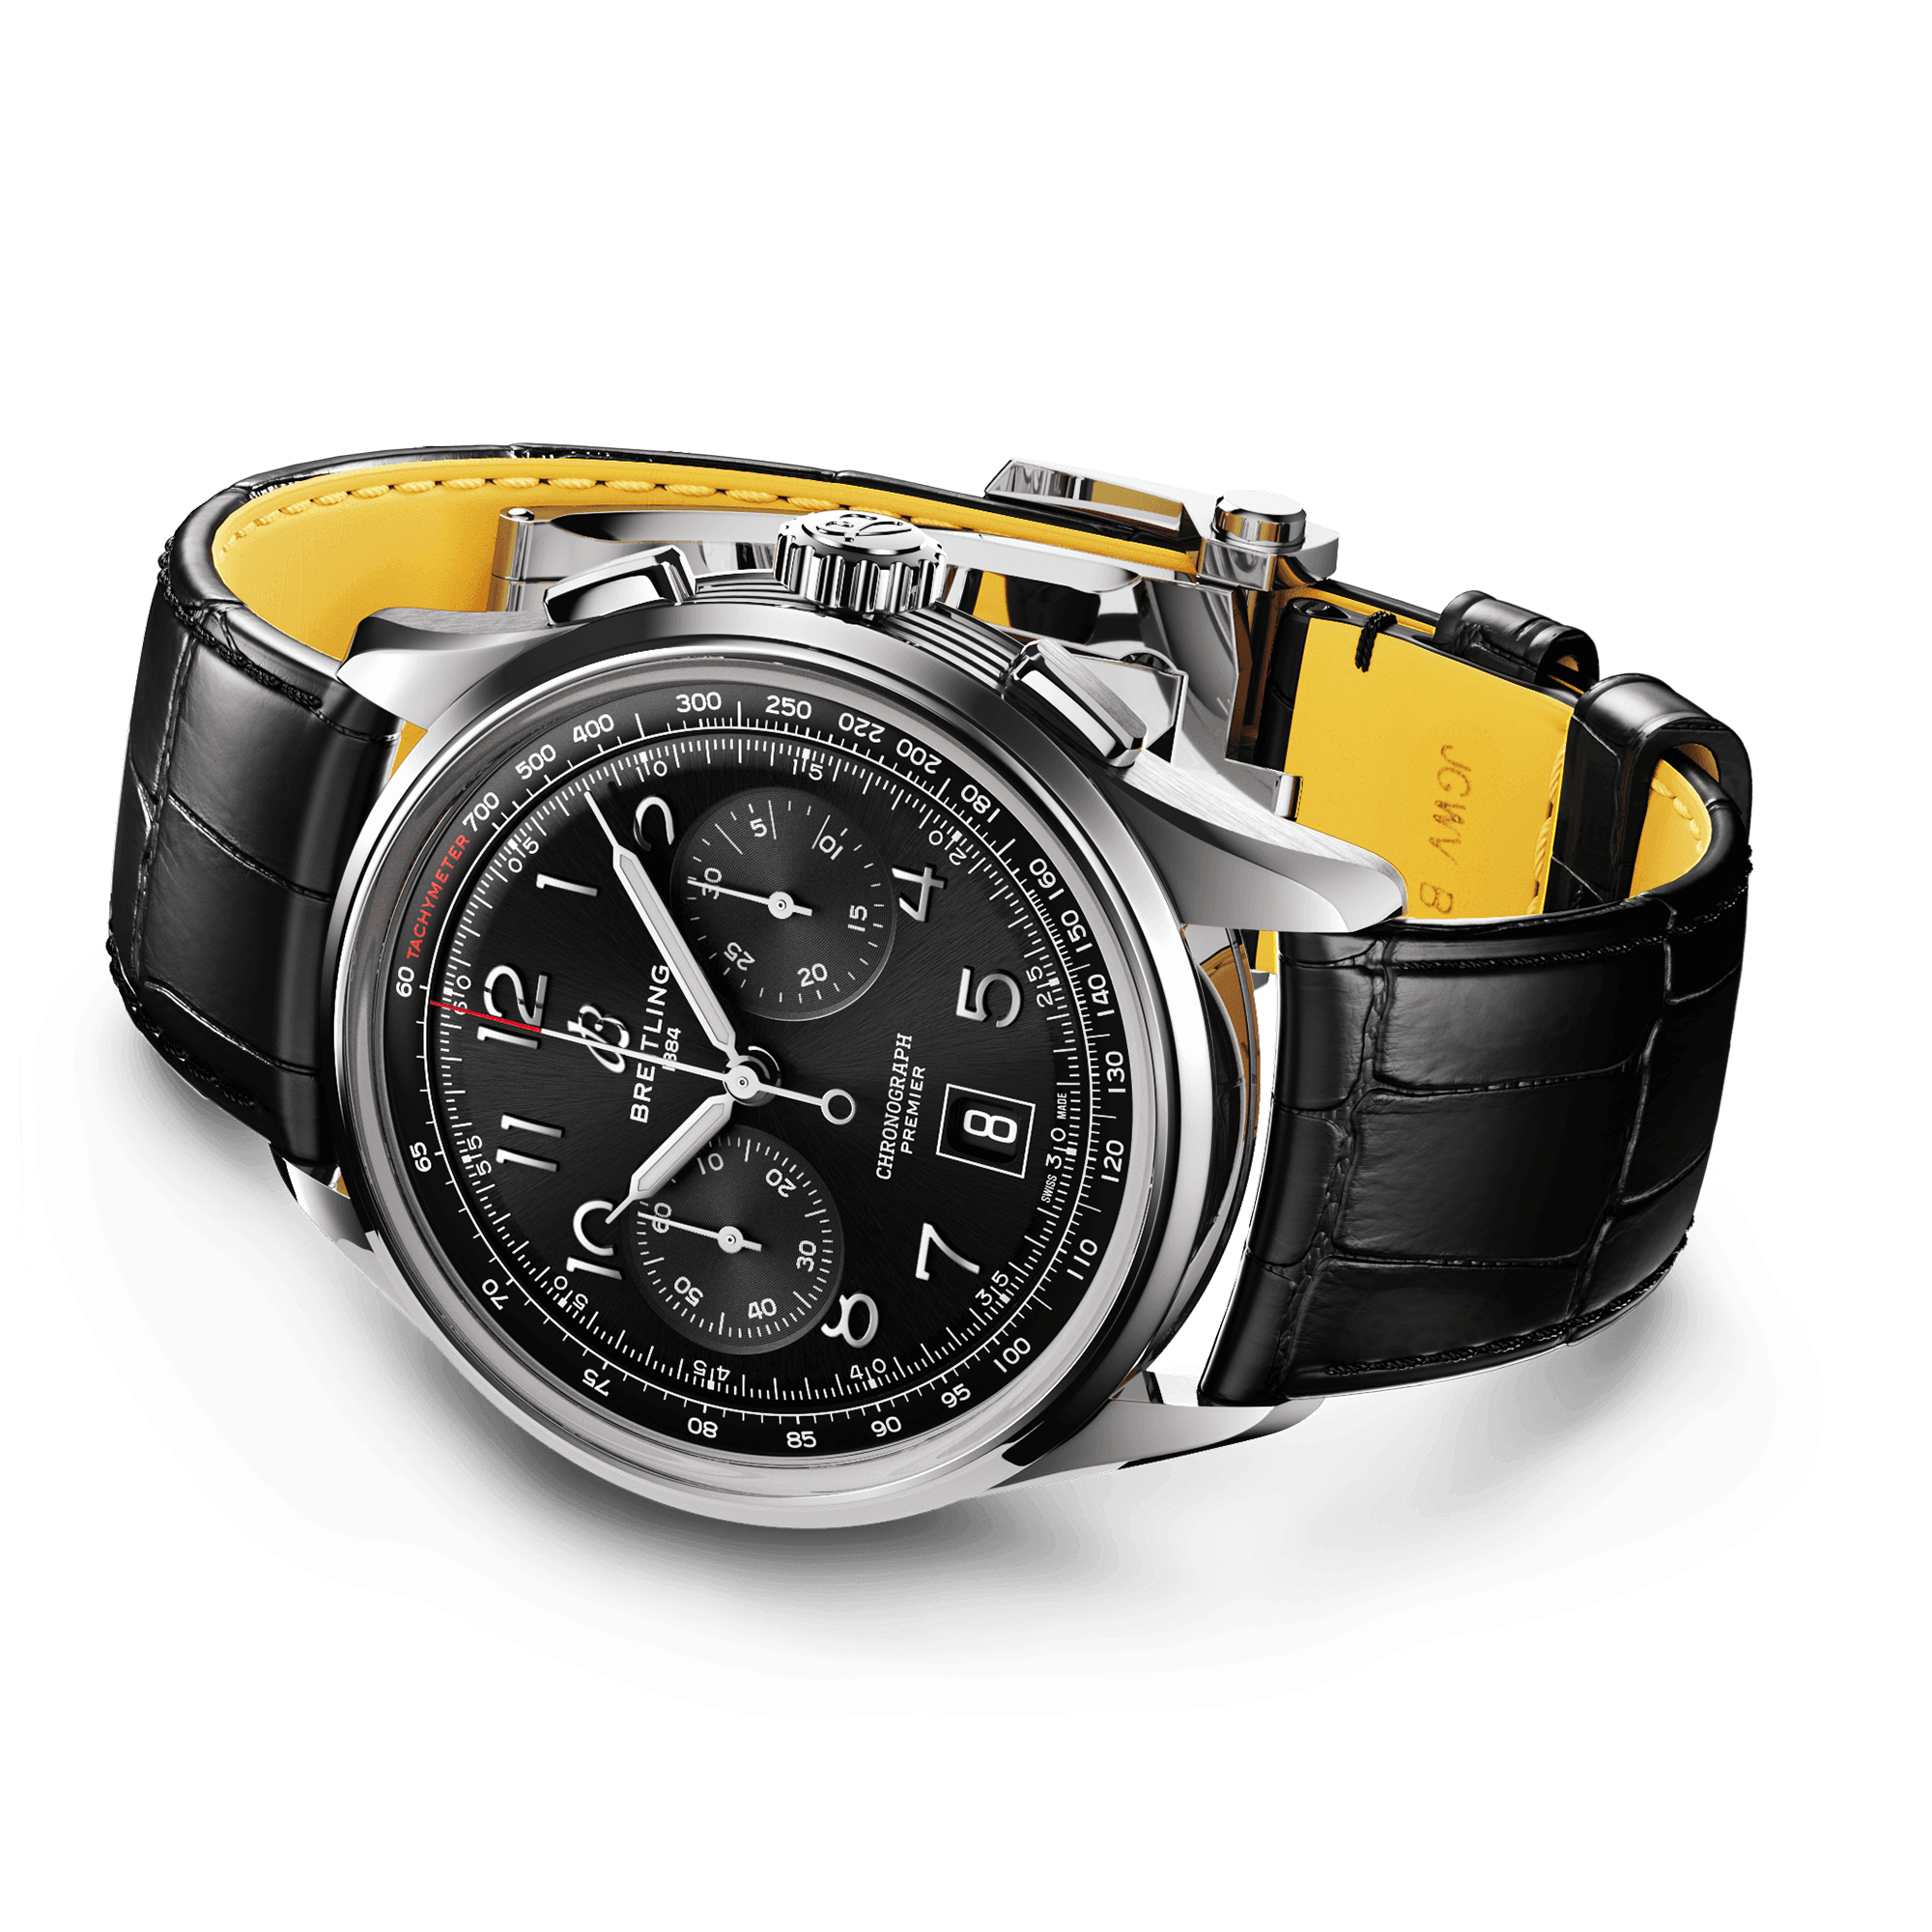 Premier B01 42mm Black Dial Automatic Chronograph Strap Watch